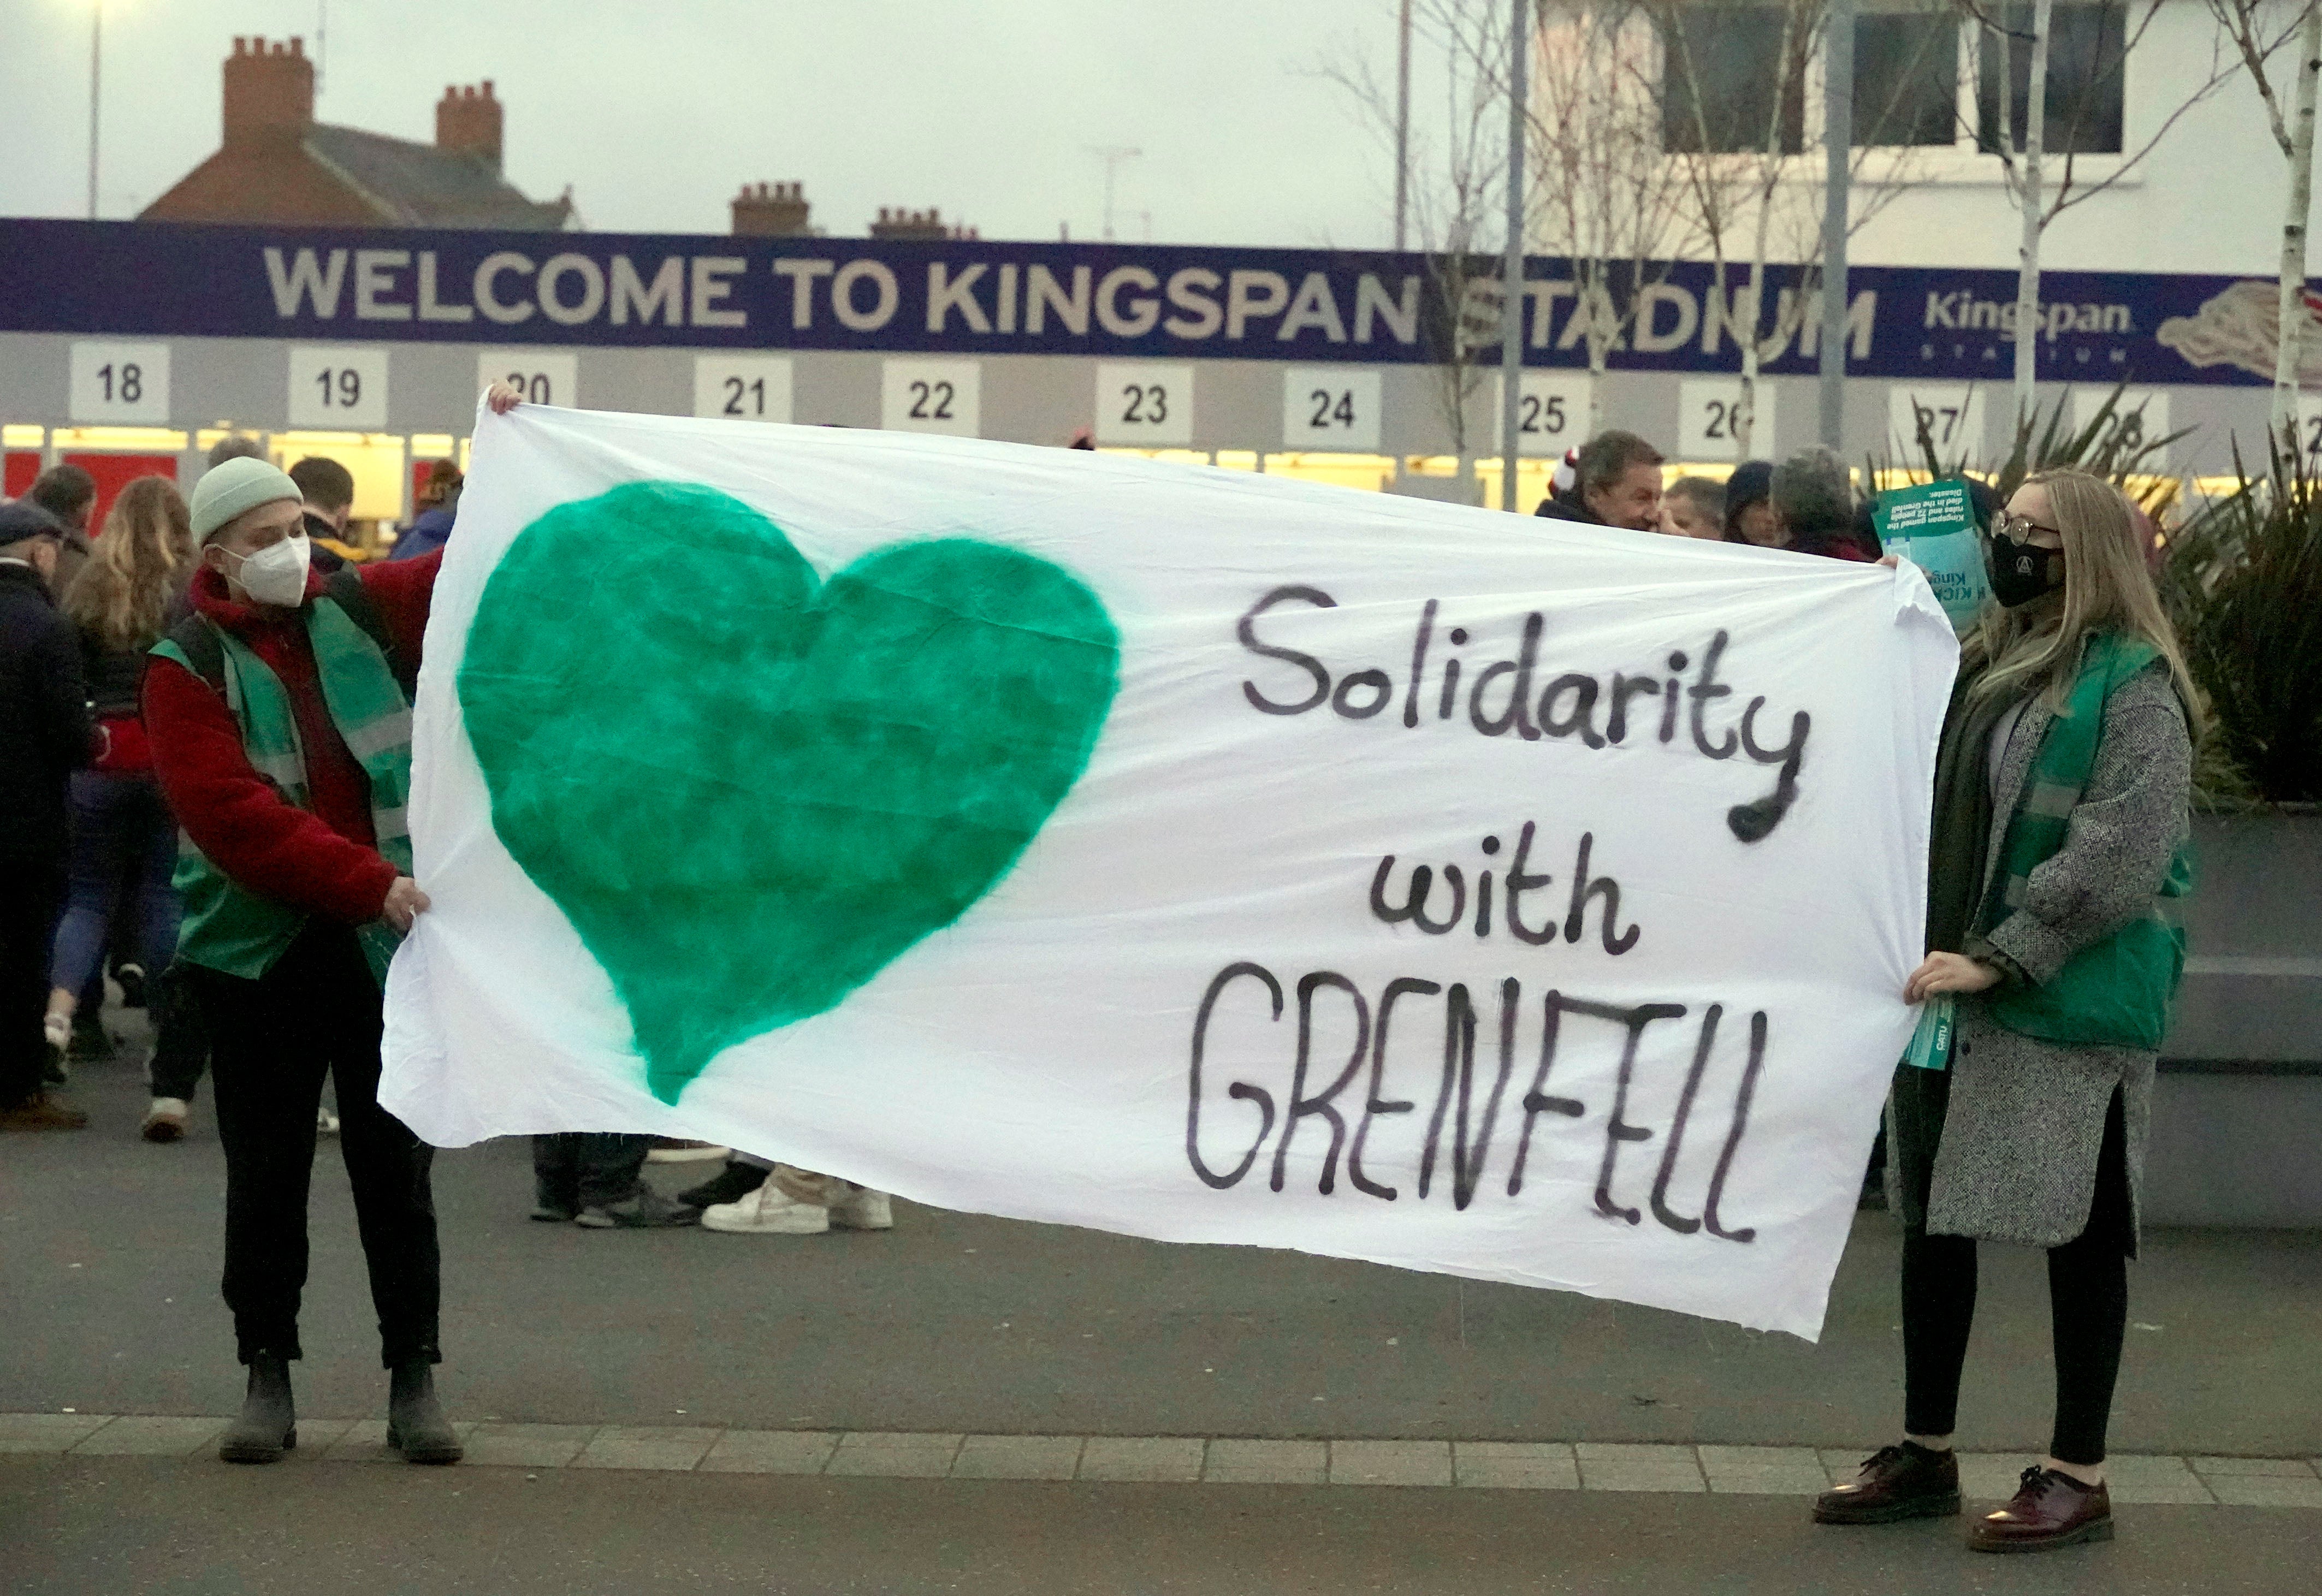 Protestors outside the Kingspan Stadium on Saturday (Niall Carson/PA)